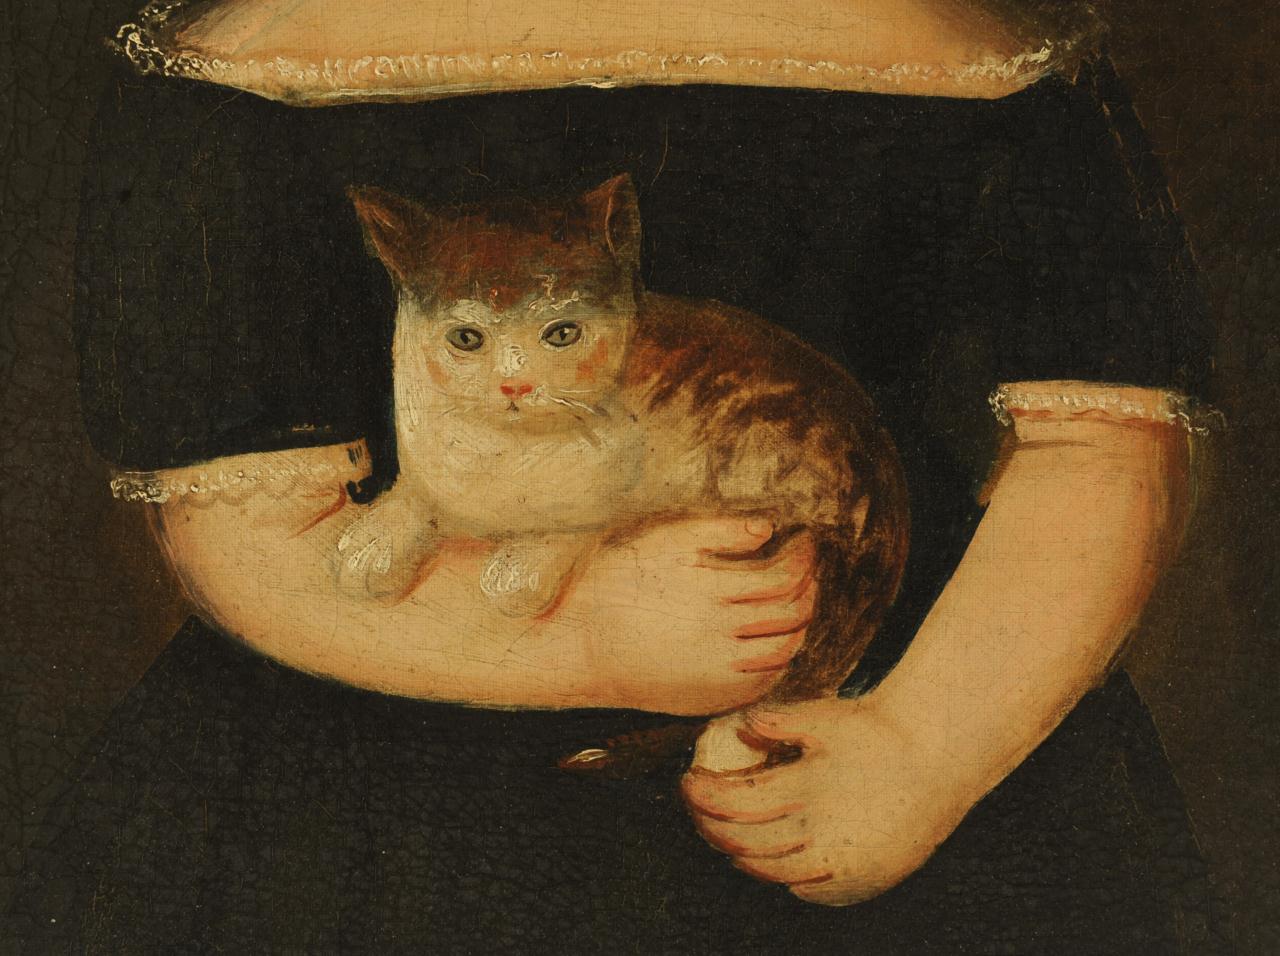 Lot 41: American School, Portrait of a Child with Kitten